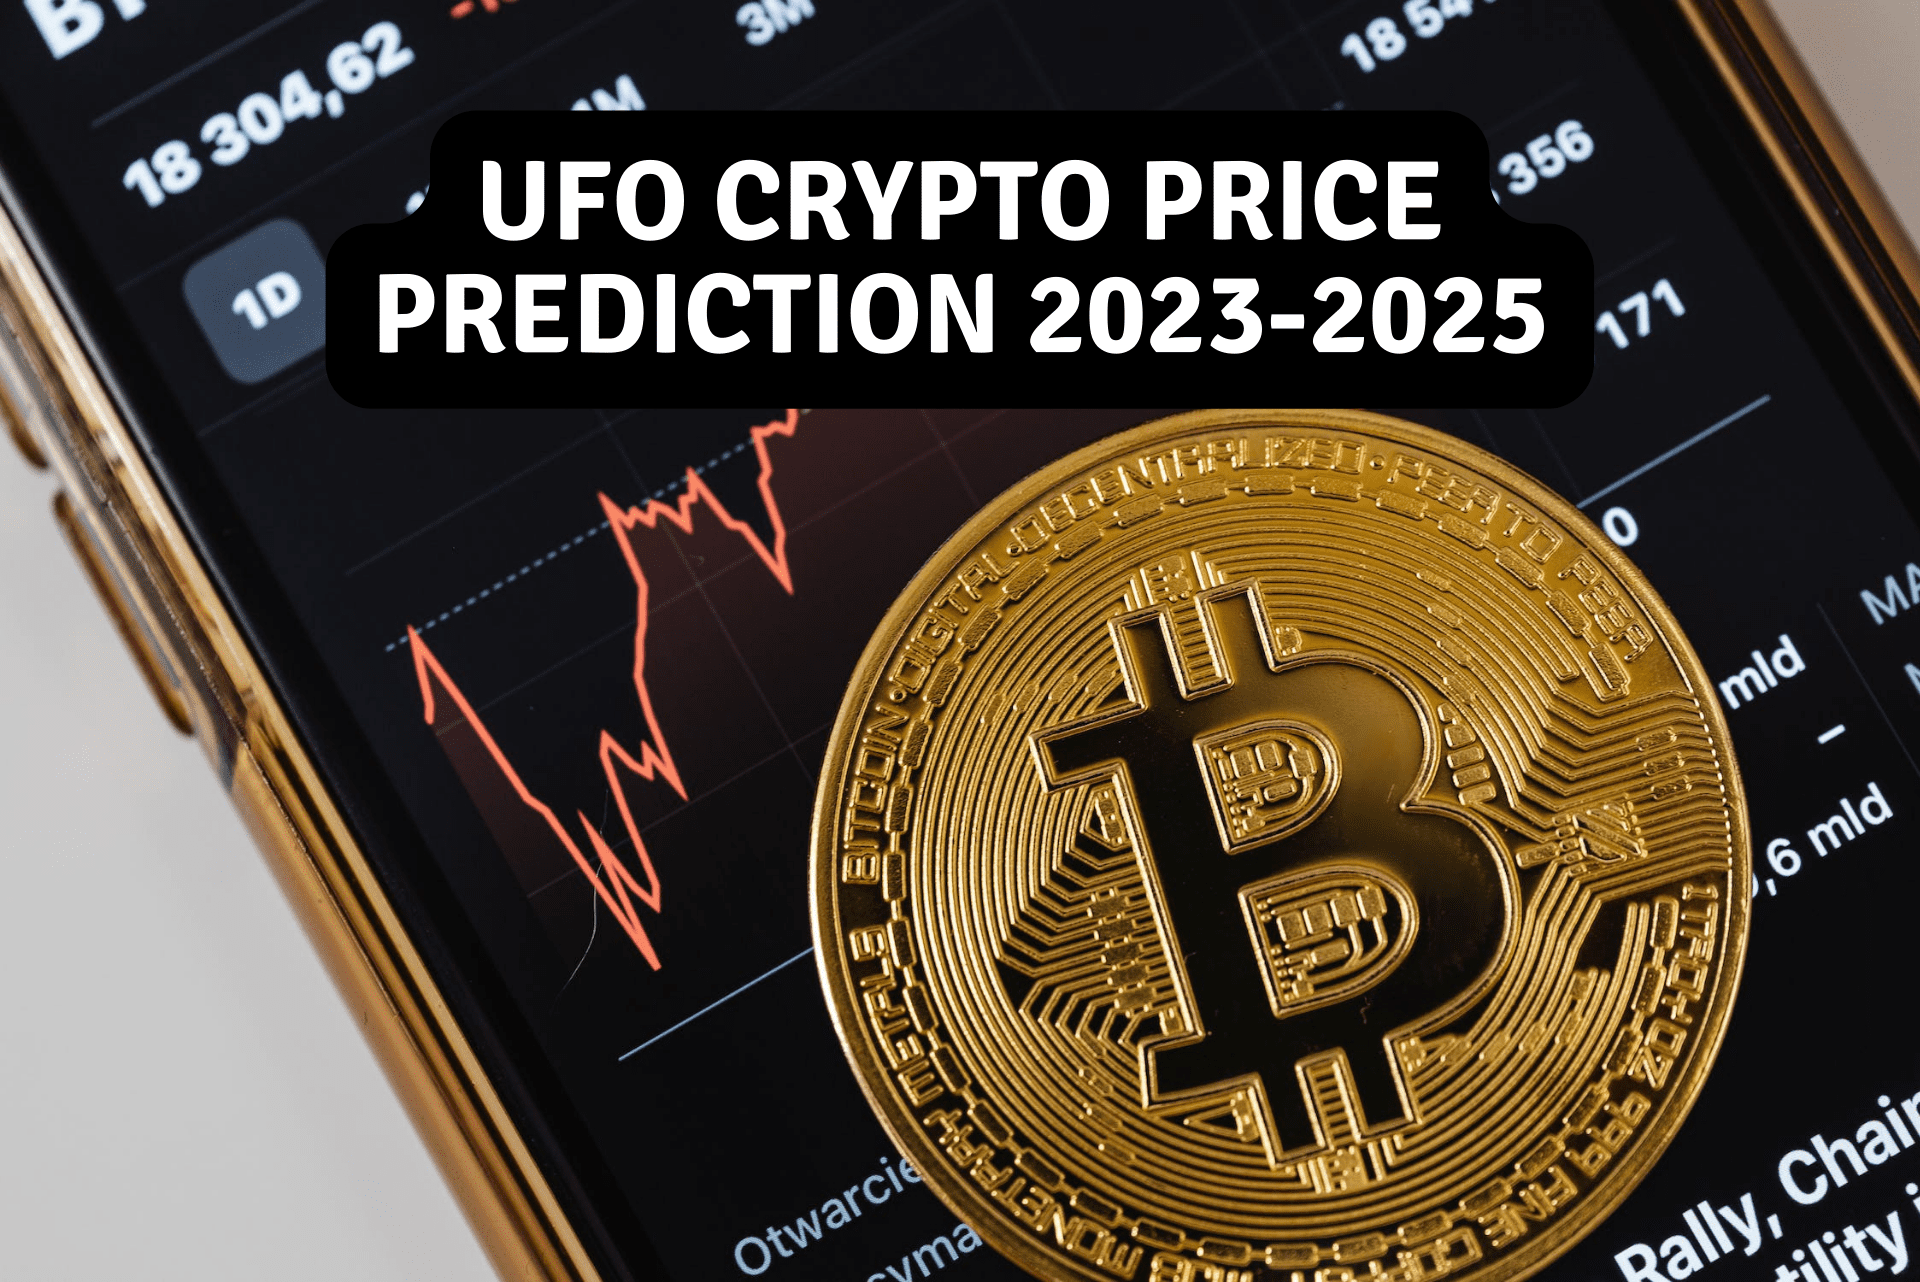 UFO Crypto Price Prediction 2023-2025